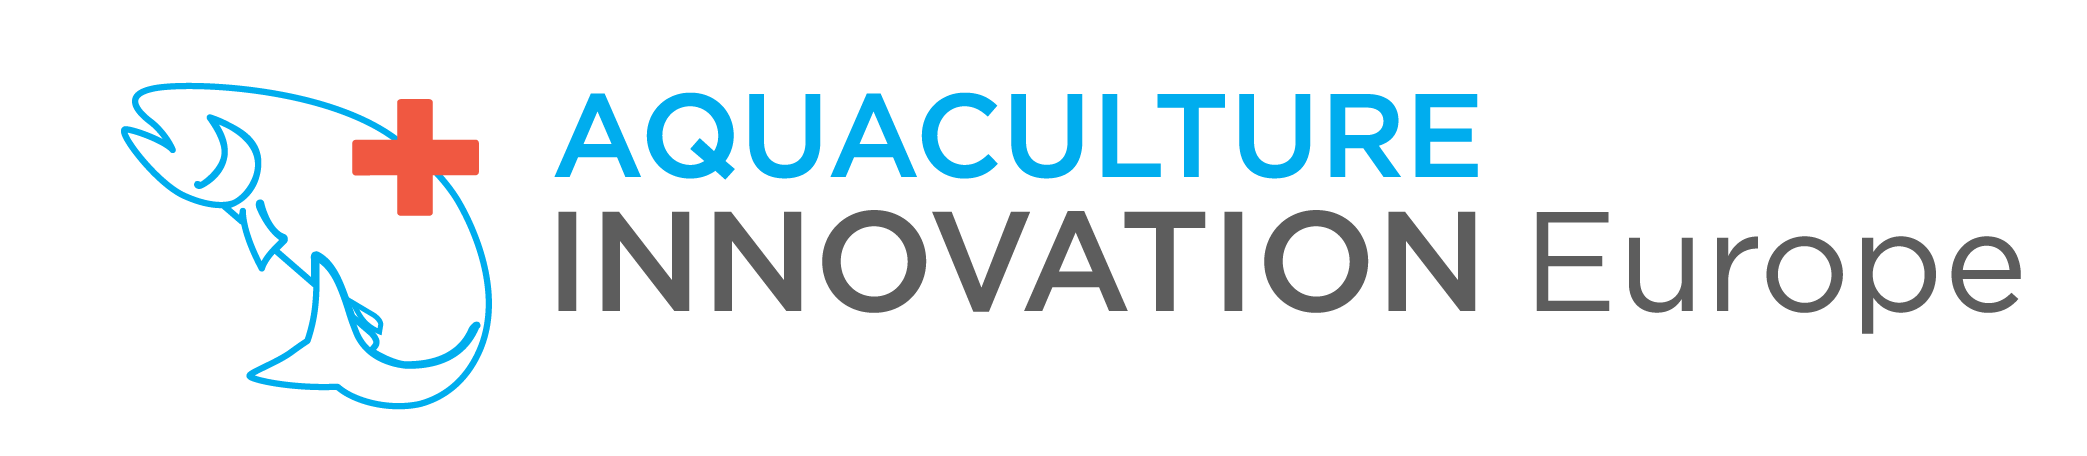 Aquaculture Innovation Summit, logo